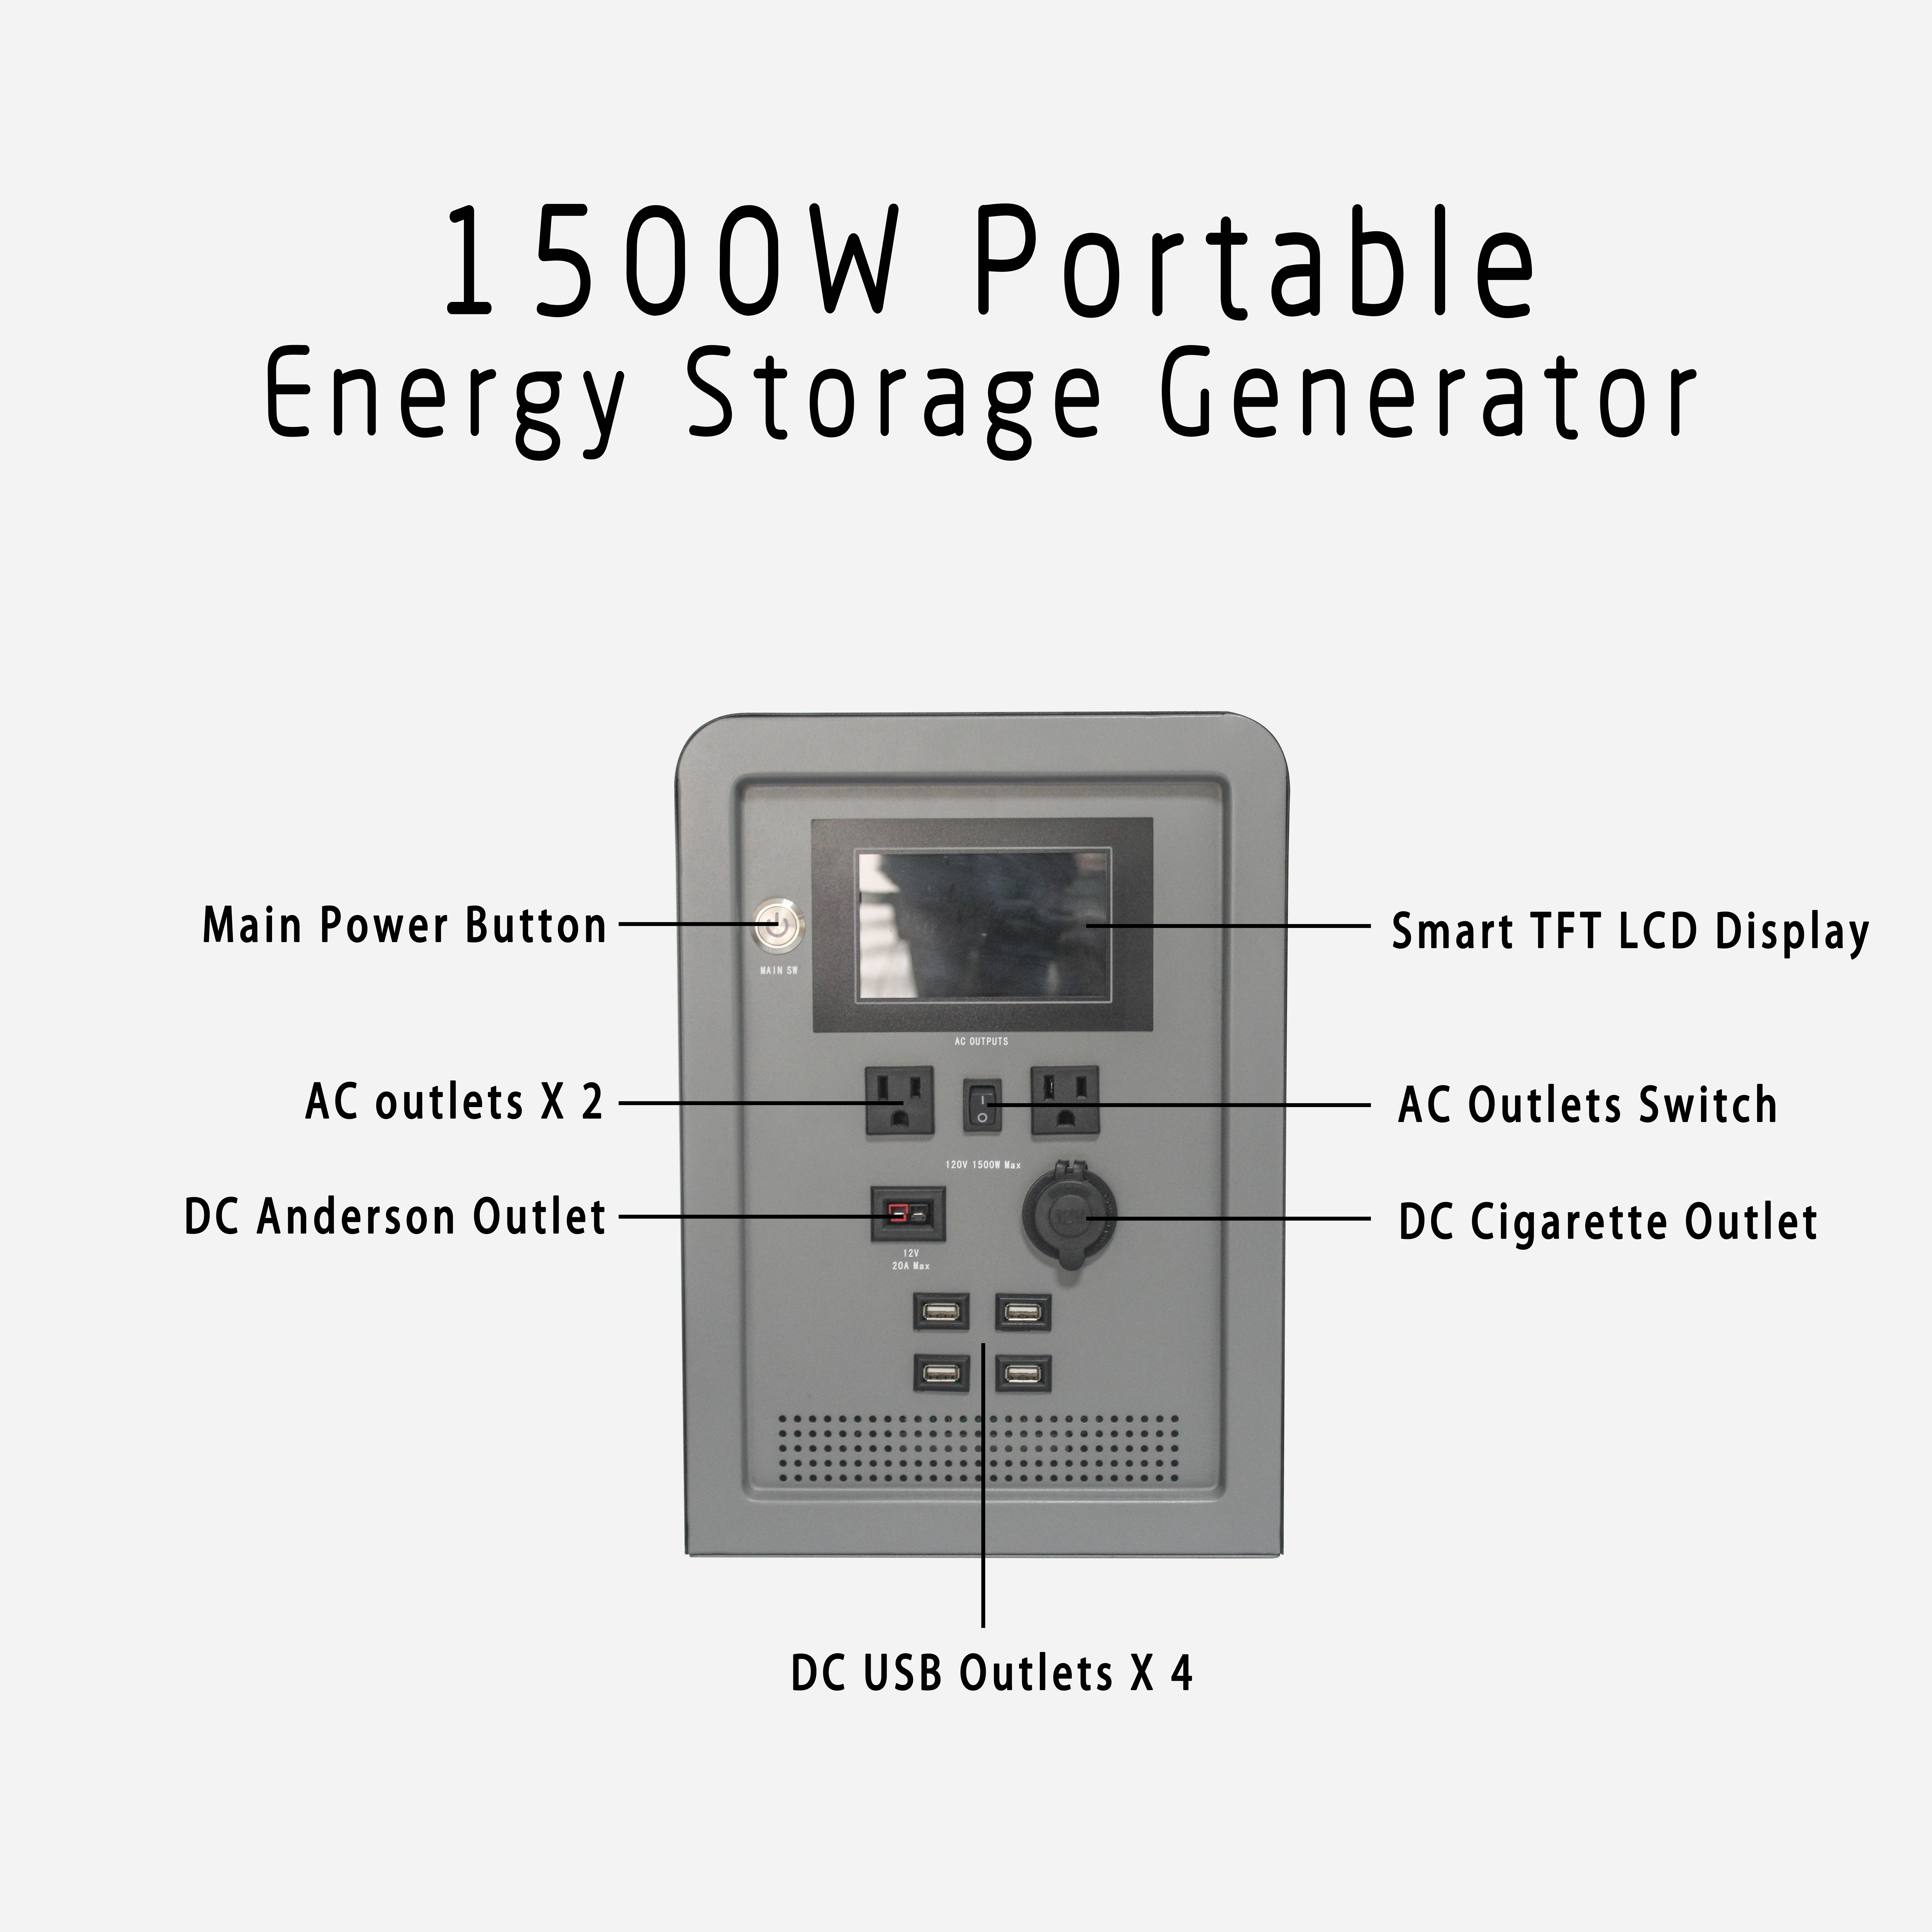 1500W Portable Energy Storage Generator